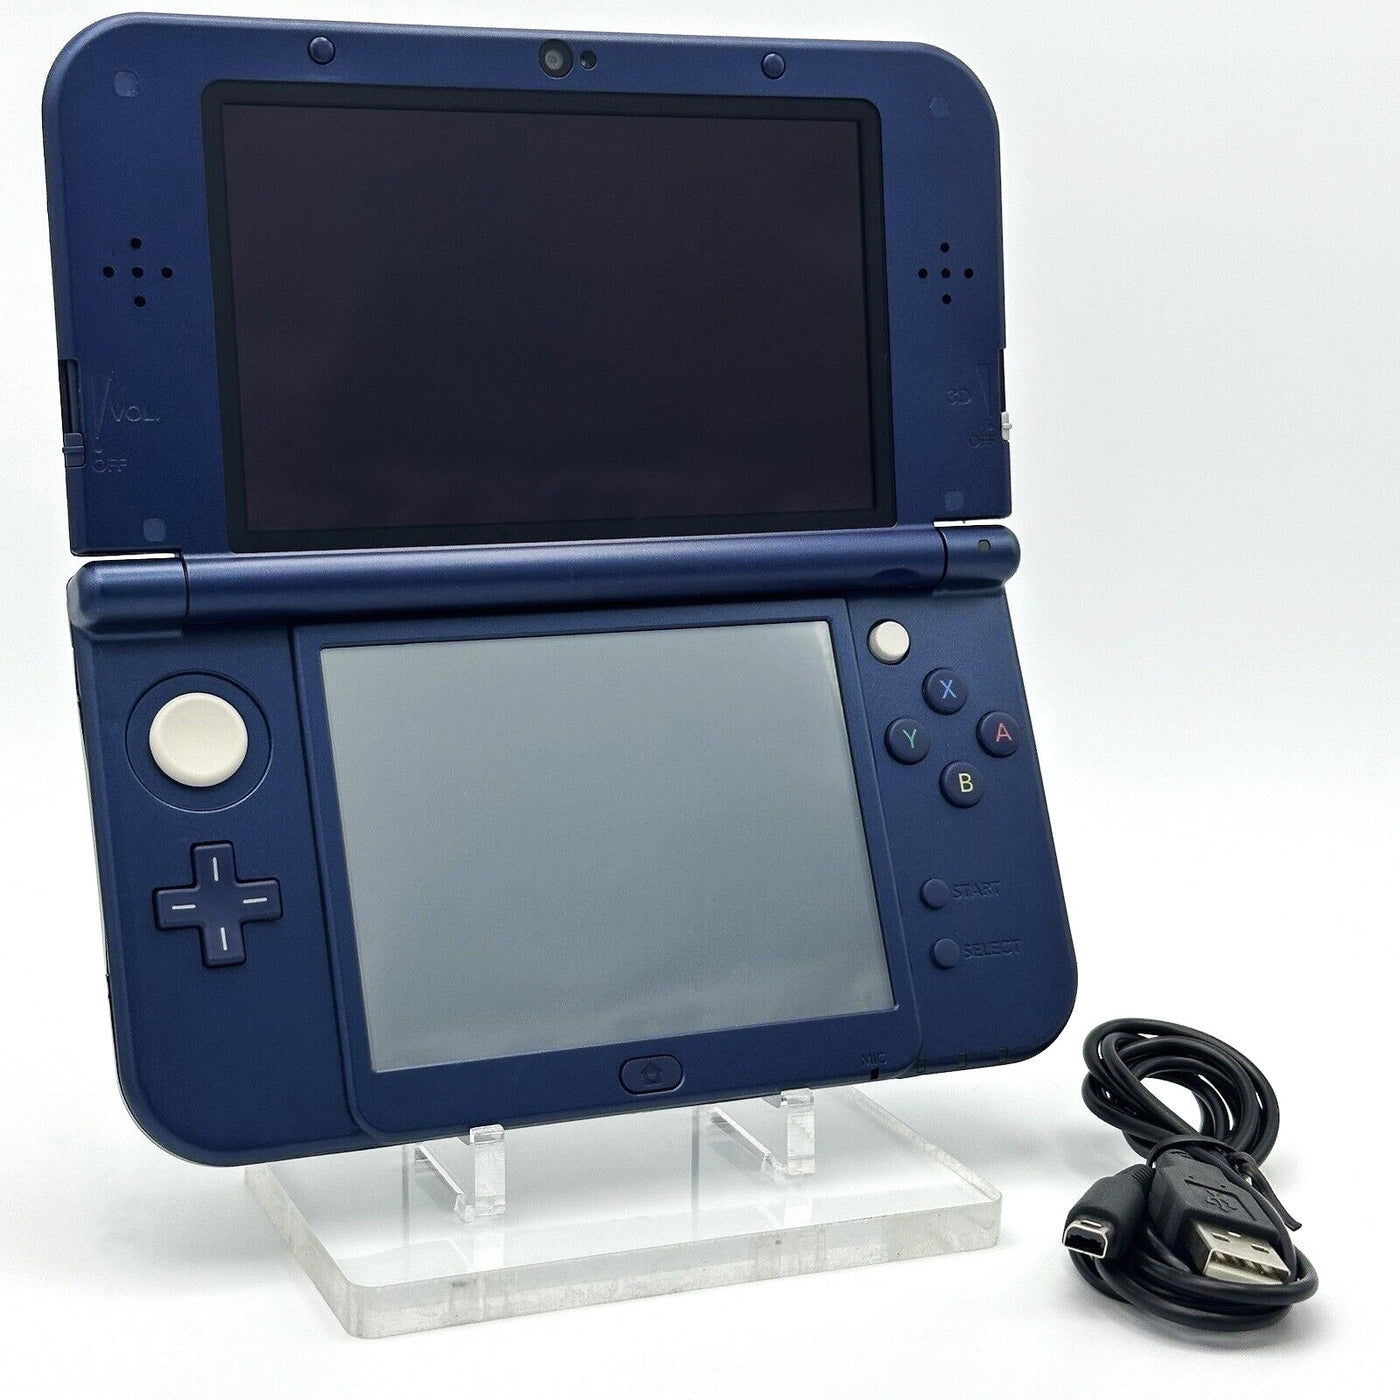 Nintendo New 3DS XL Console - Metallic Blue - Refurbished